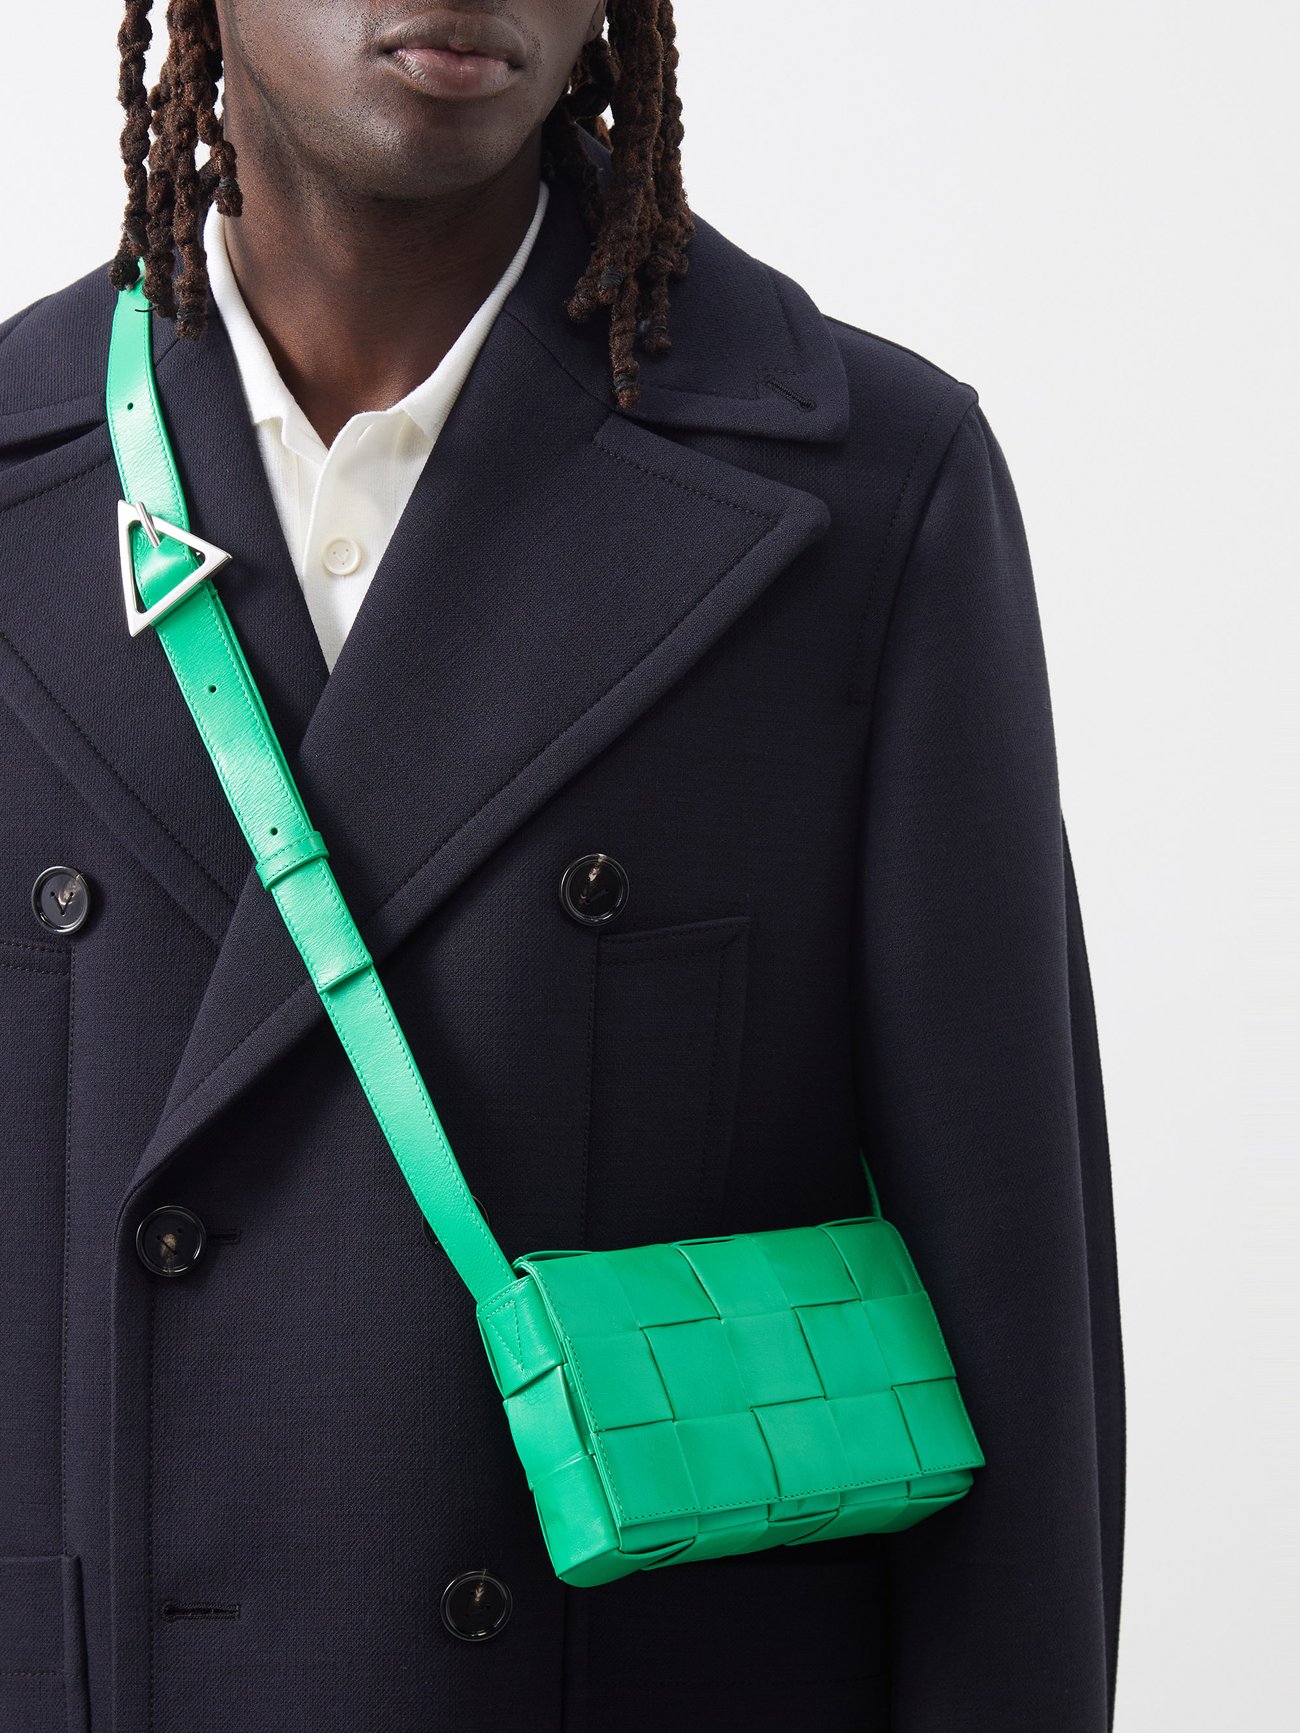 Bottega Veneta - Cassette Intrecciato Leather Shoulder Bag Green - Onesize